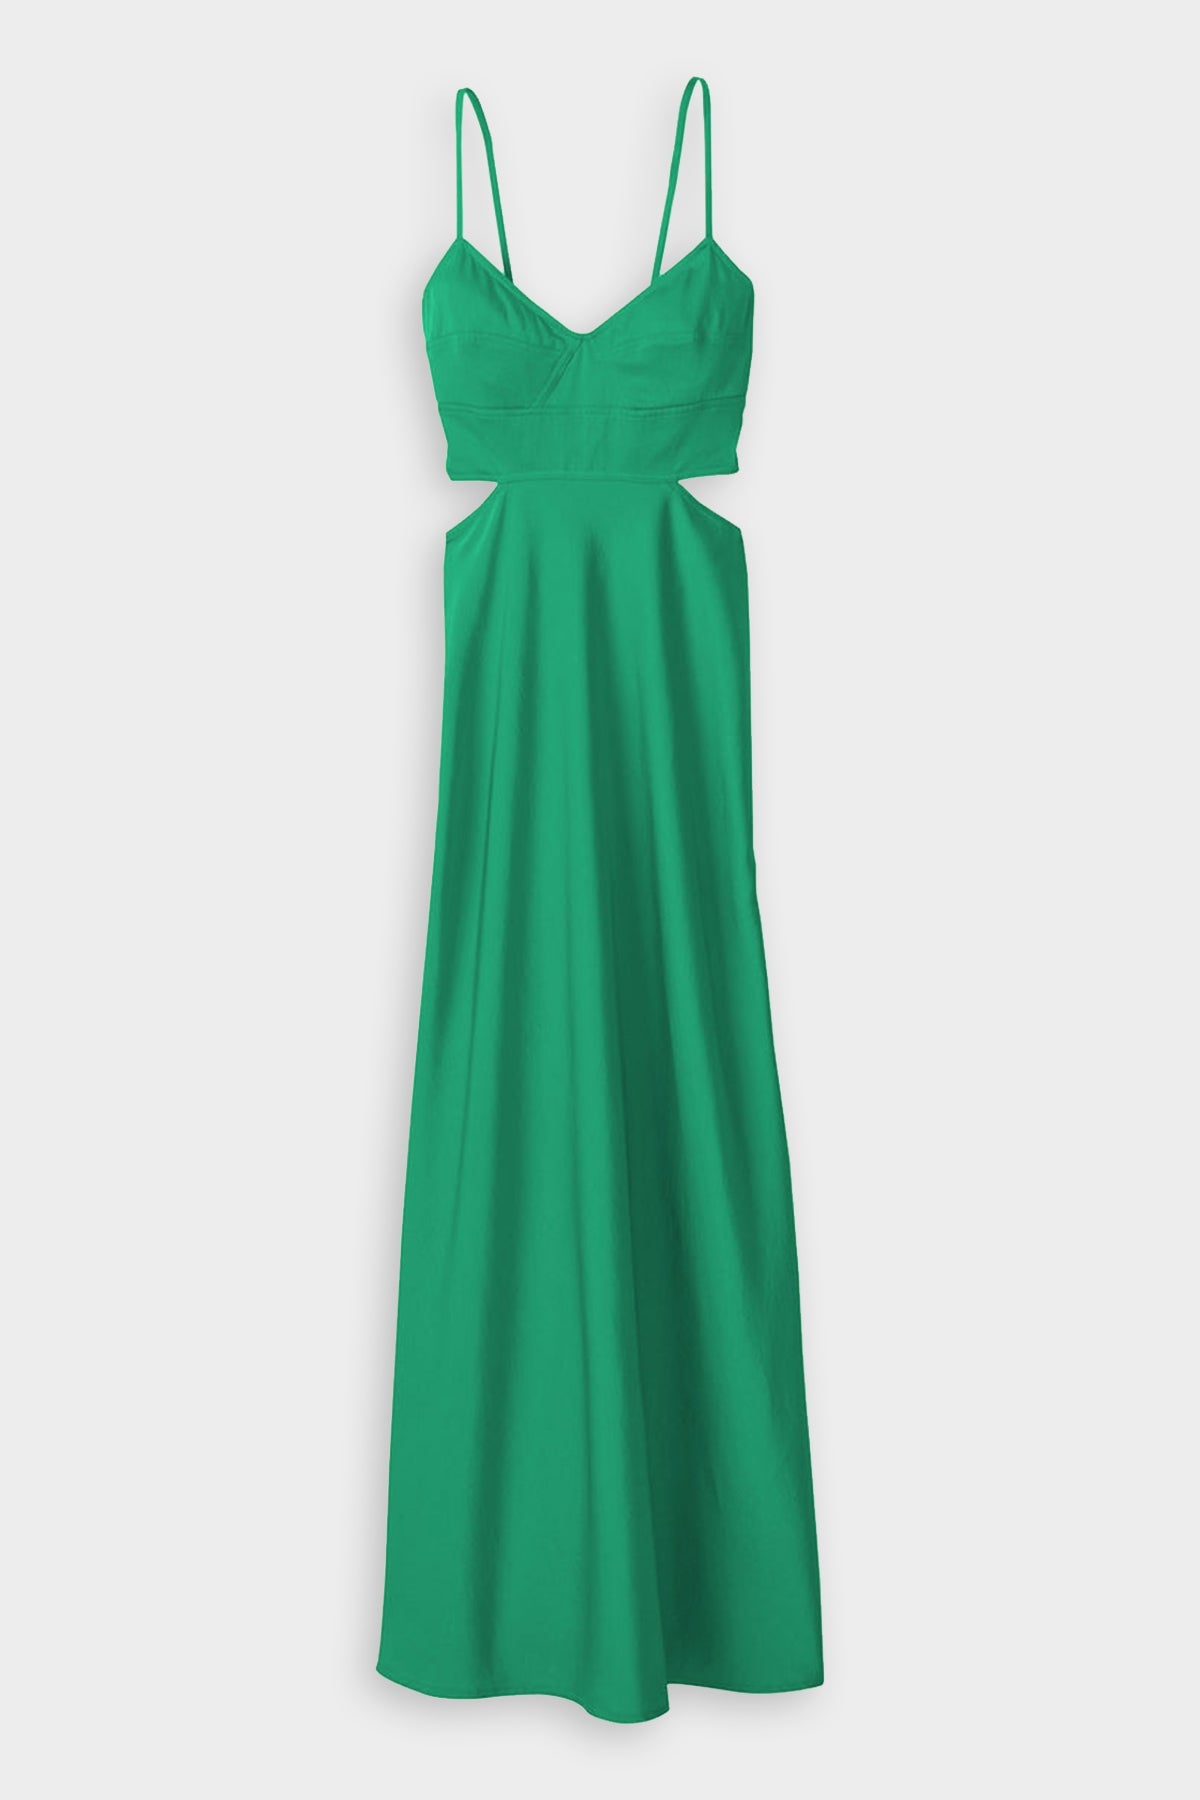 Blakely Dress in Spruce - shop-olivia.com